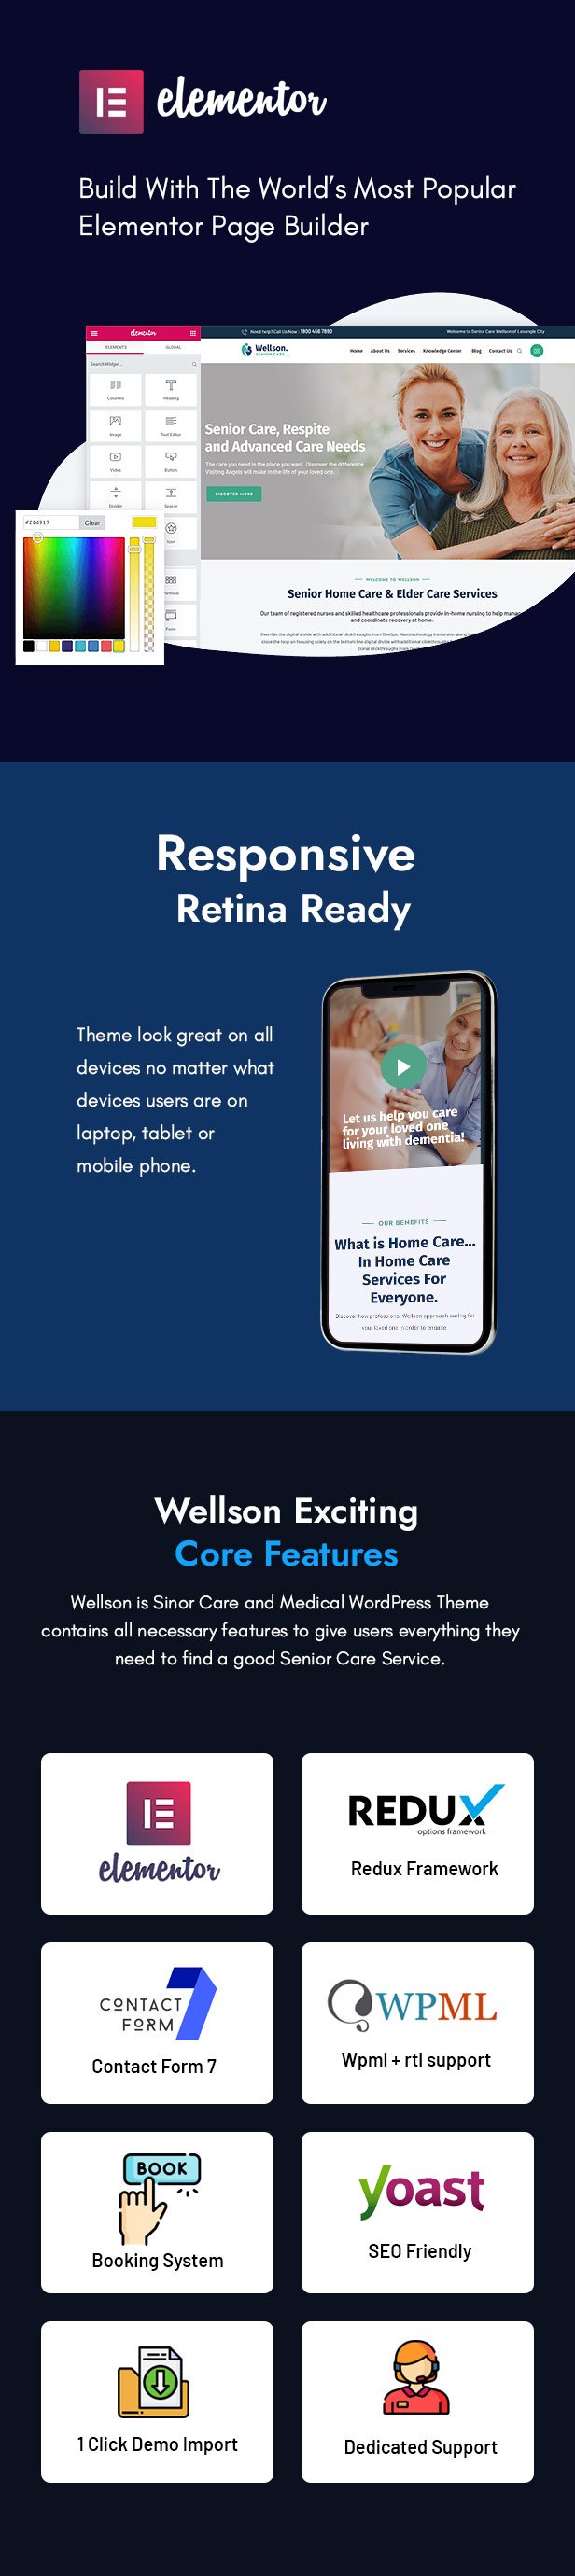 Wellson - Senior Care and Medical WordPress Theme - 2